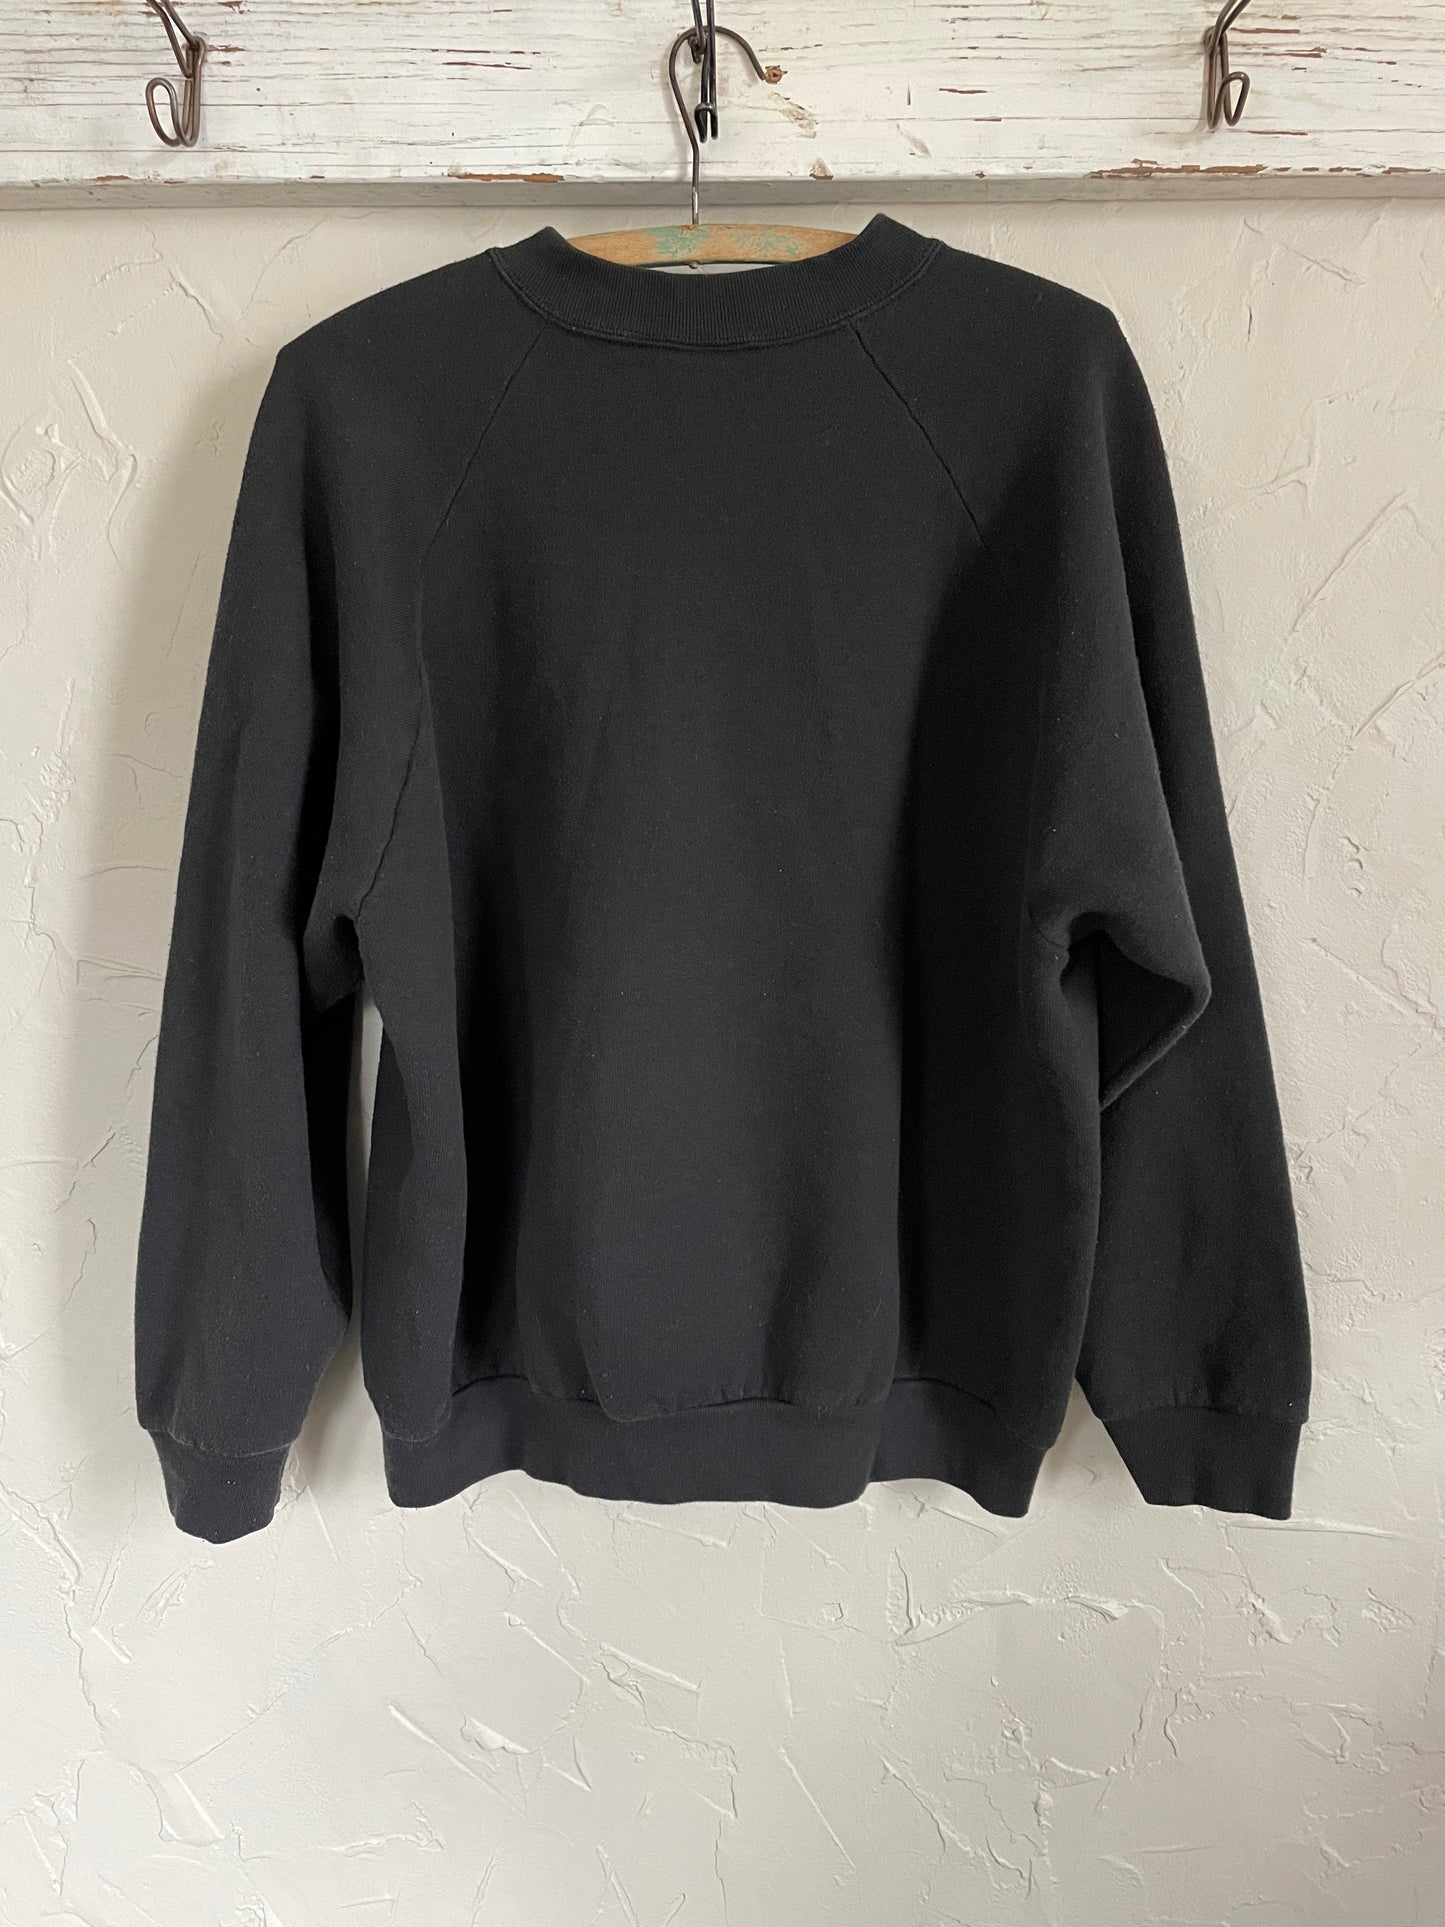 90s Blank Black Sweatshirt